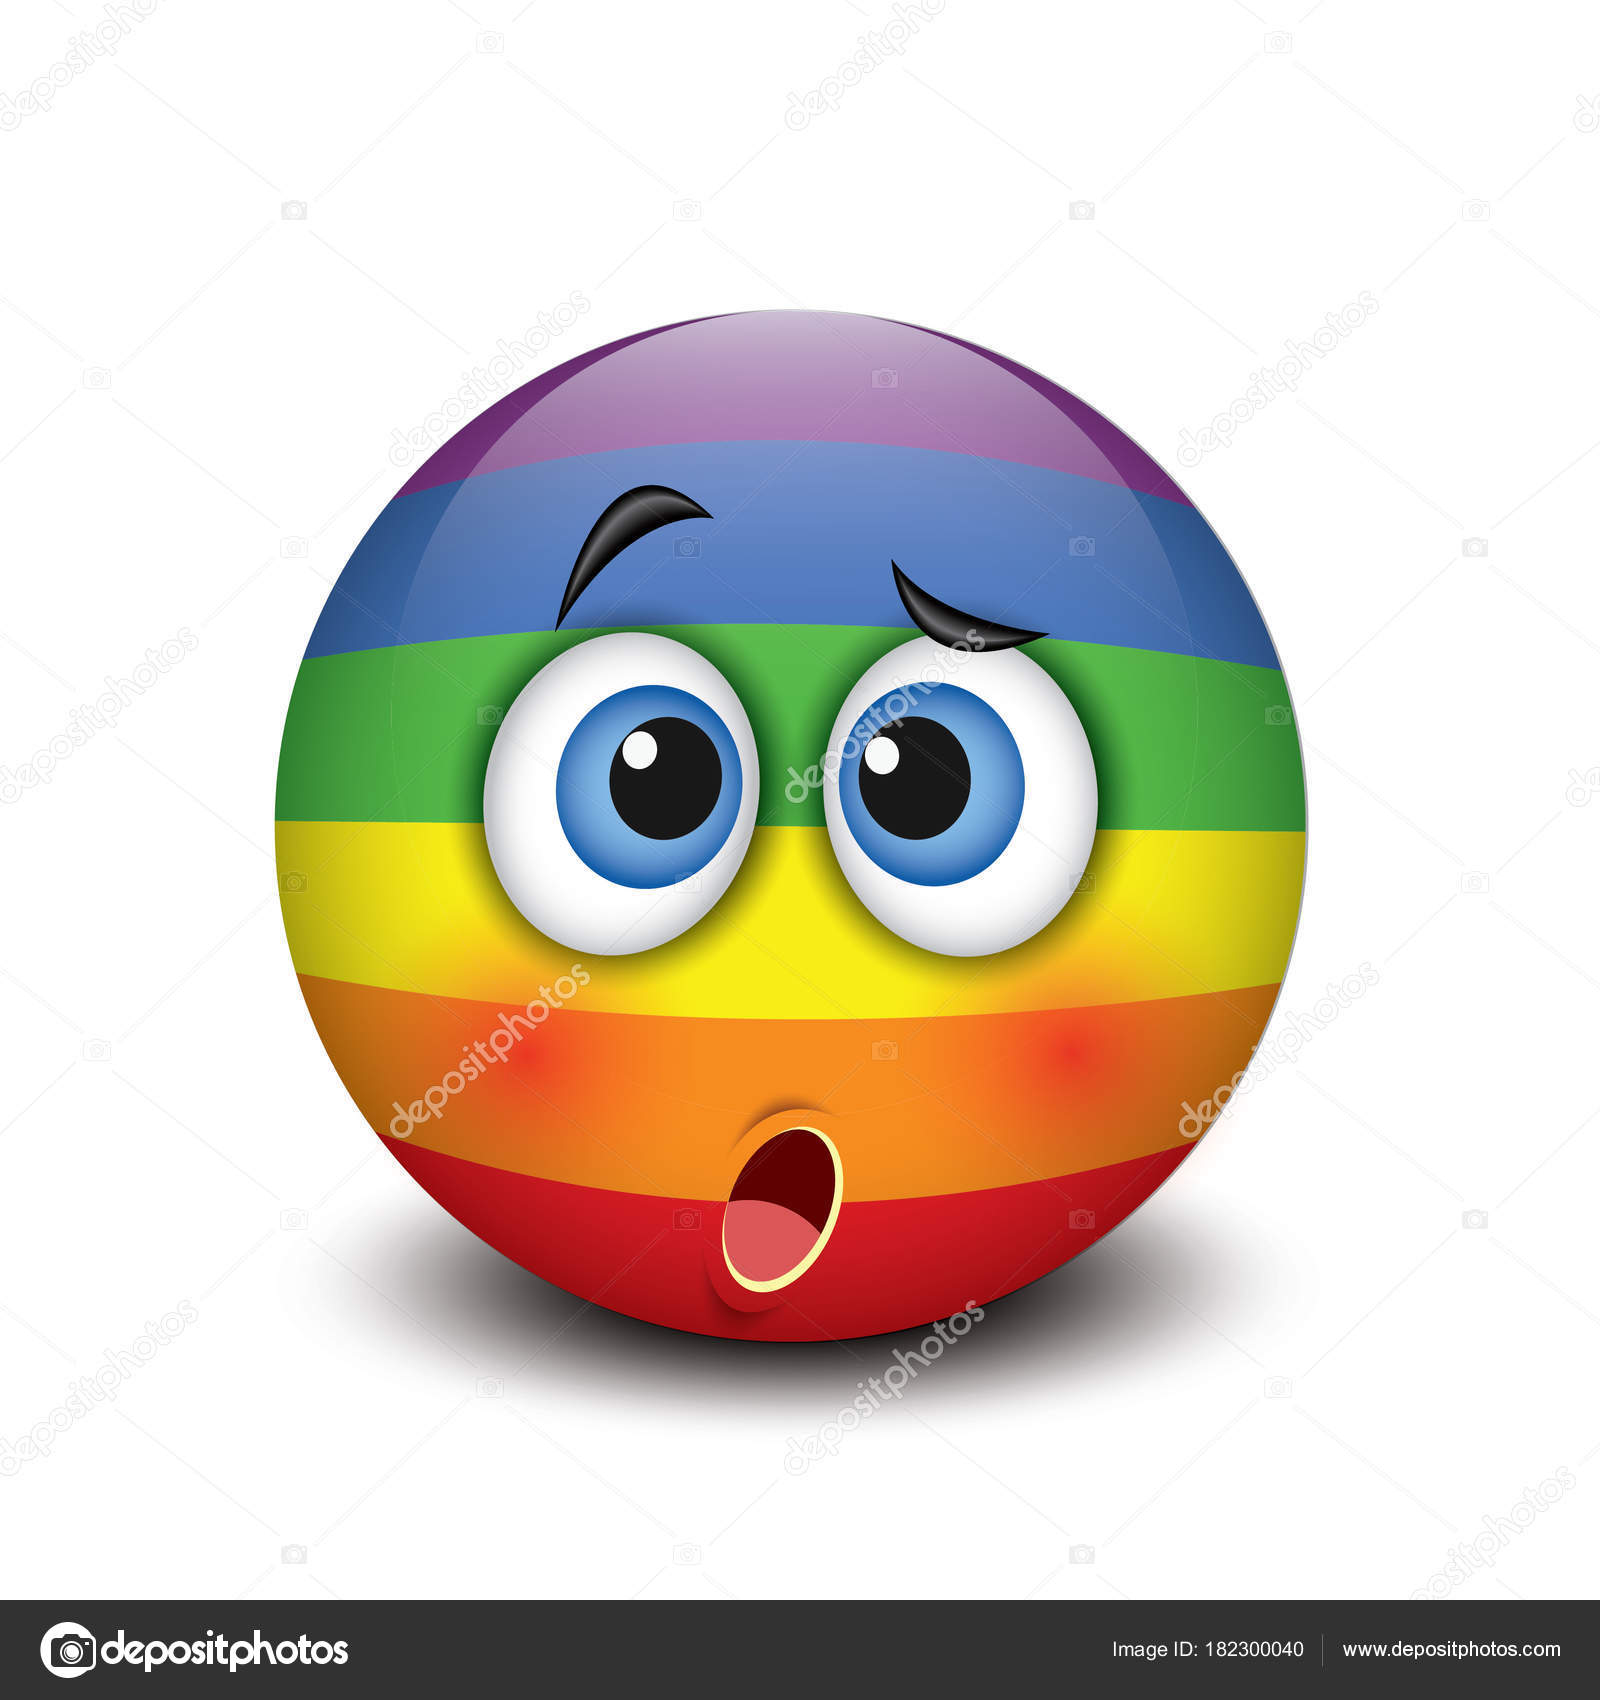 Cute Frightened Emoticon Emoji Smiley Vector Illustration Stock